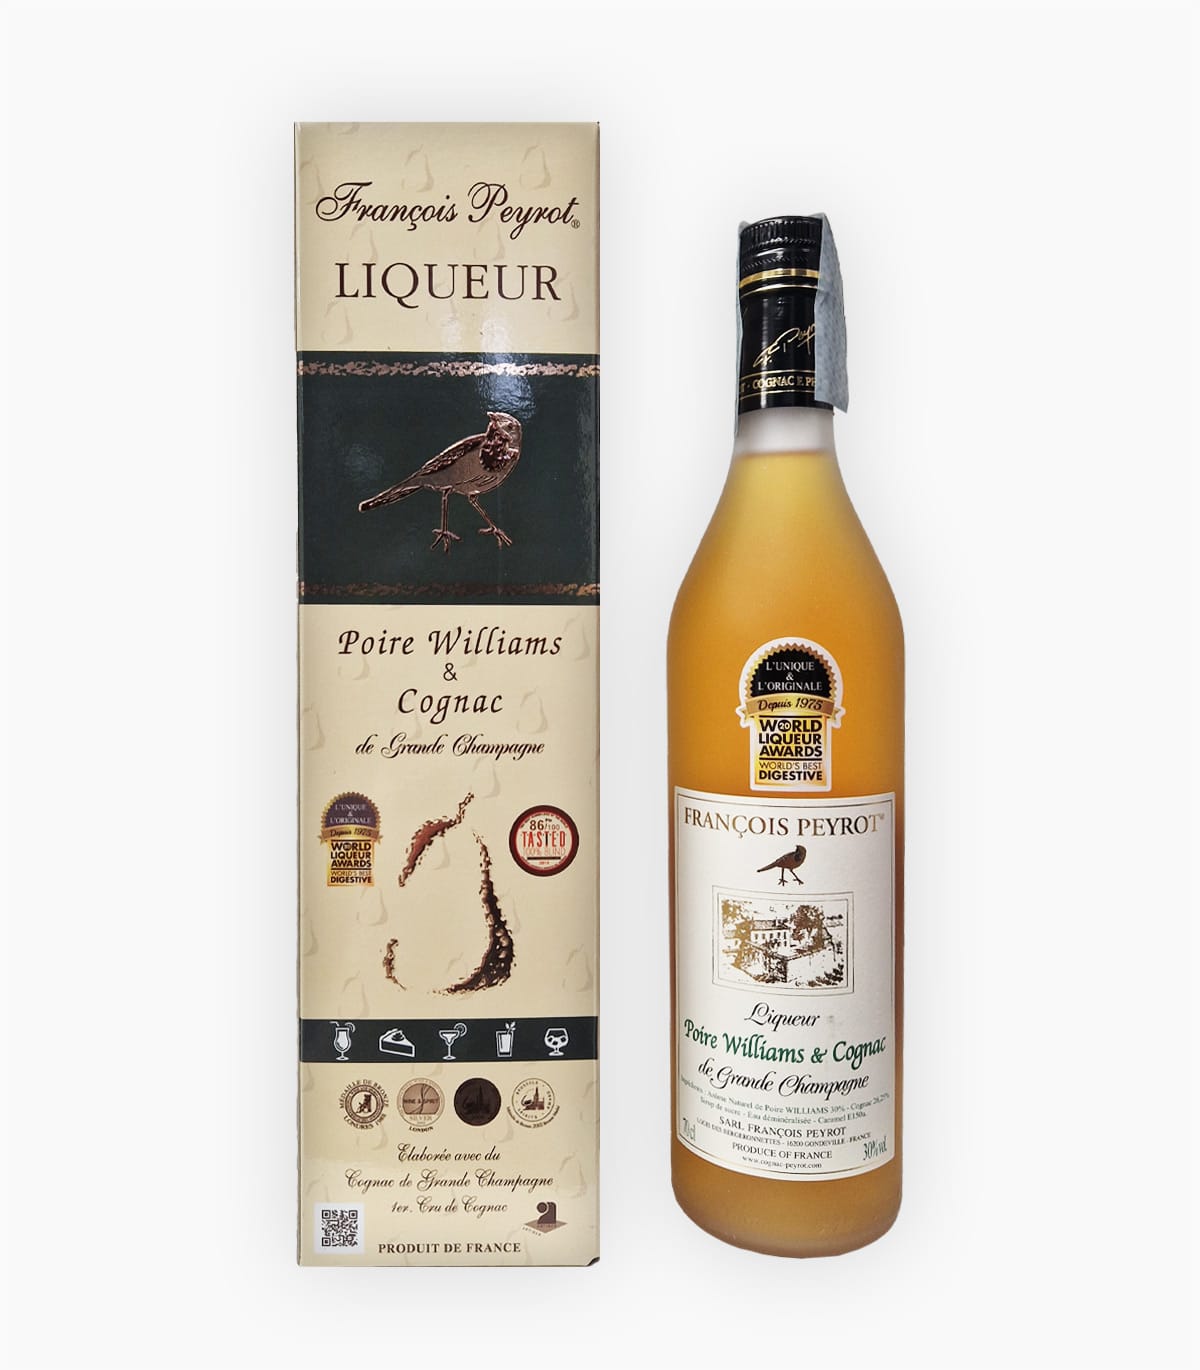 François Peyrot Liqueur Poire Williams & Cognac vendita al prezzo